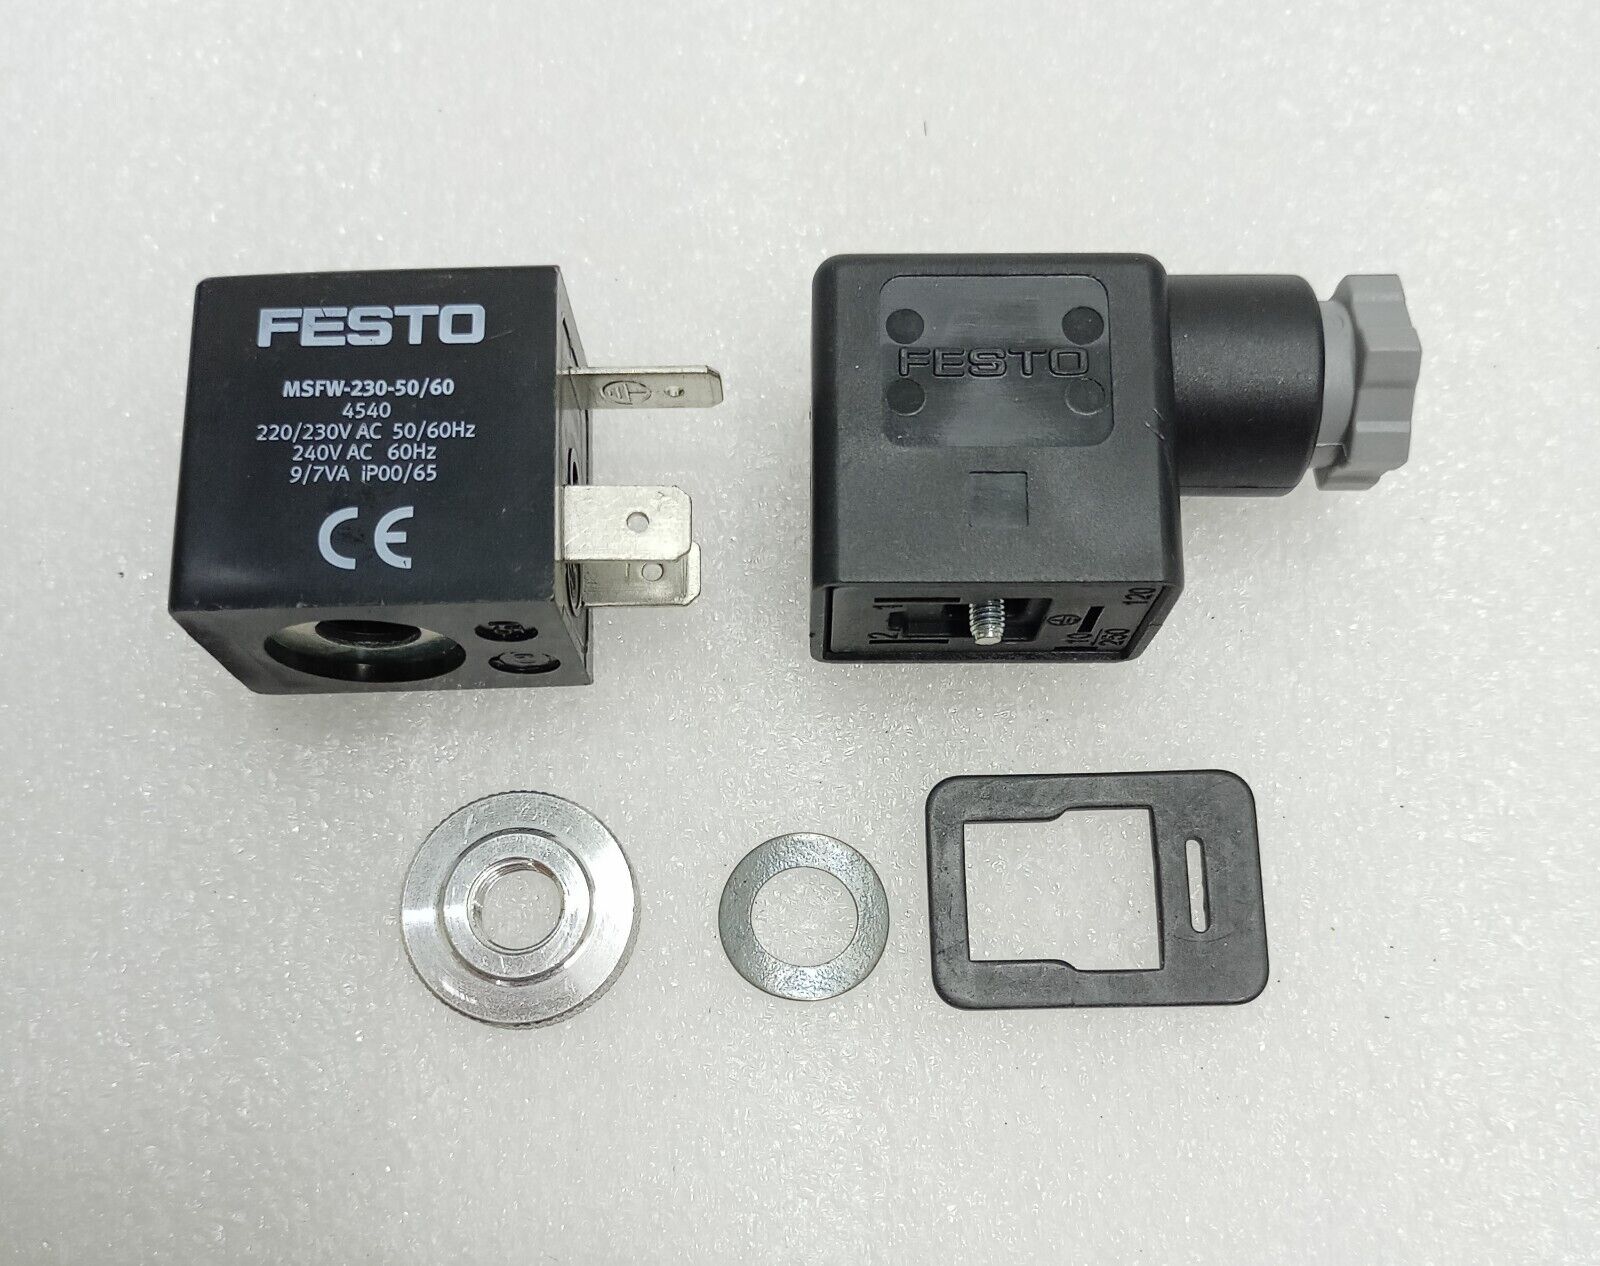 MSFW-230-50 (Festo) – 4